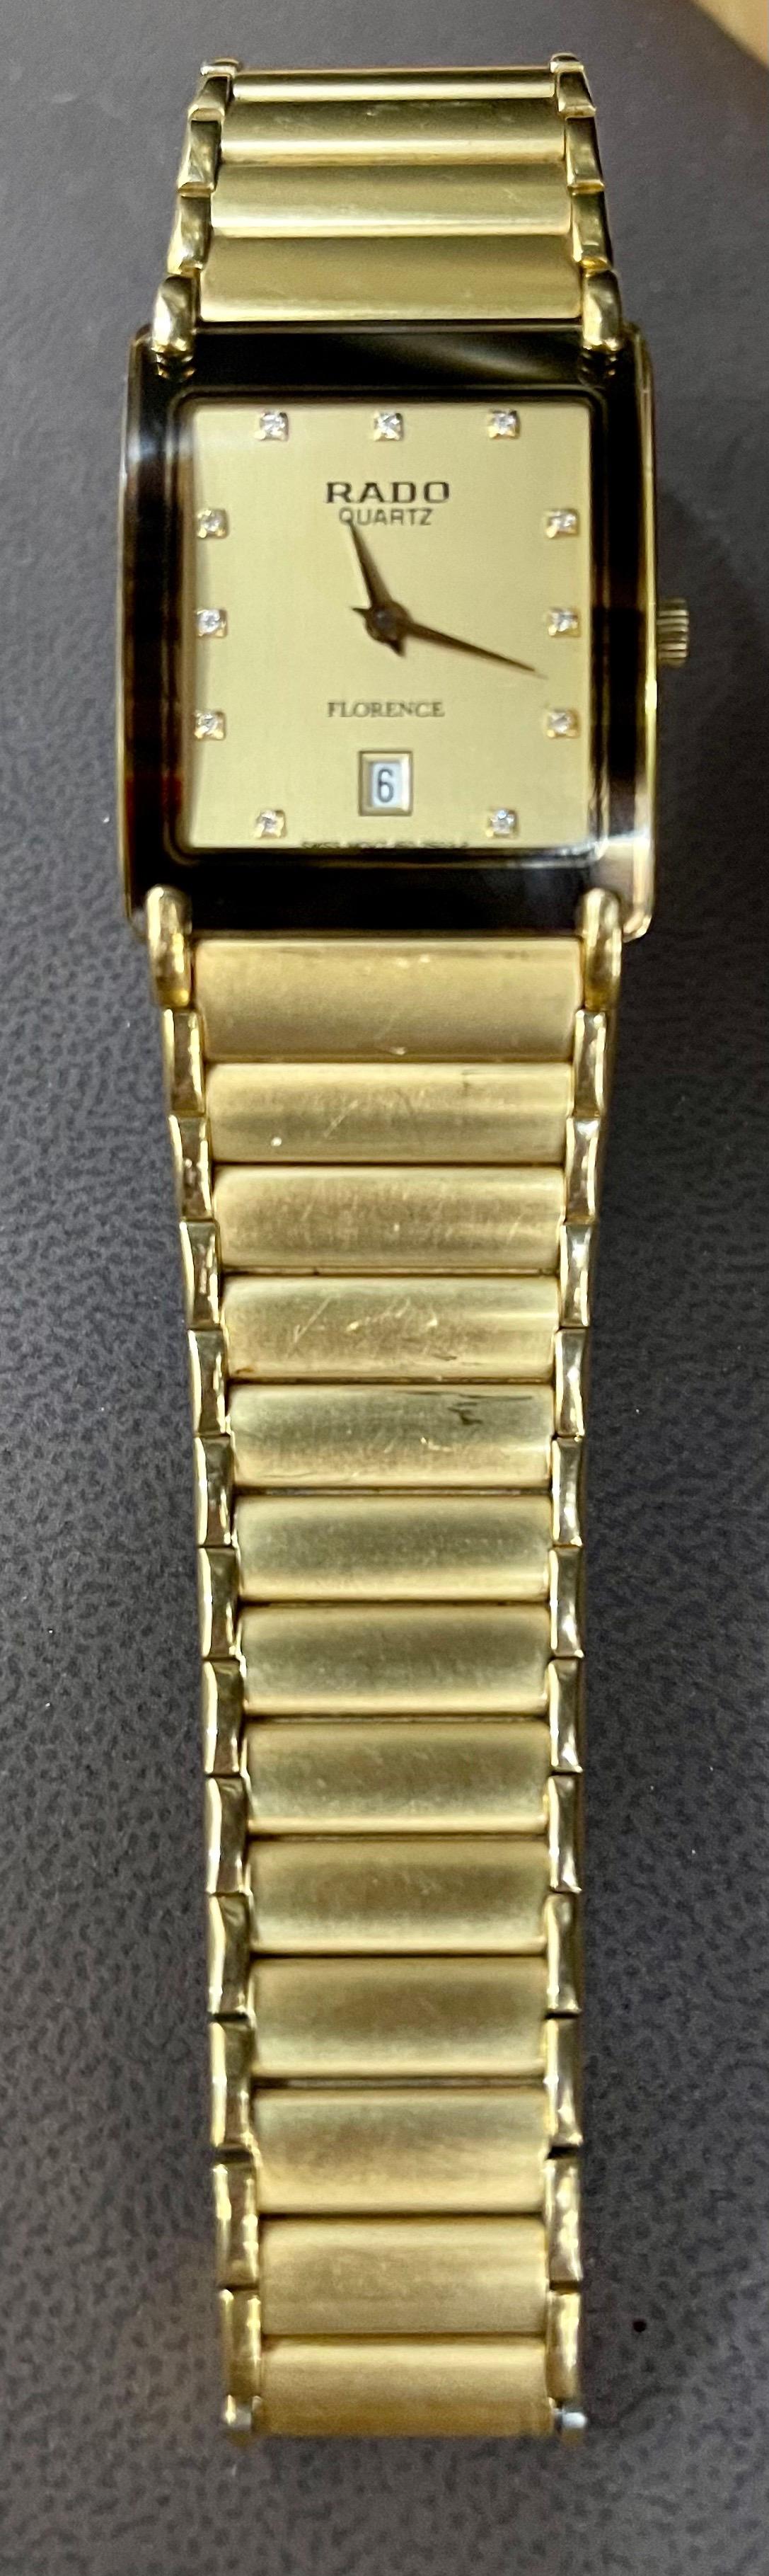 Rado Florence Jubile Men's Quartz, Date Watch 91406, Gold Tone with Box 9